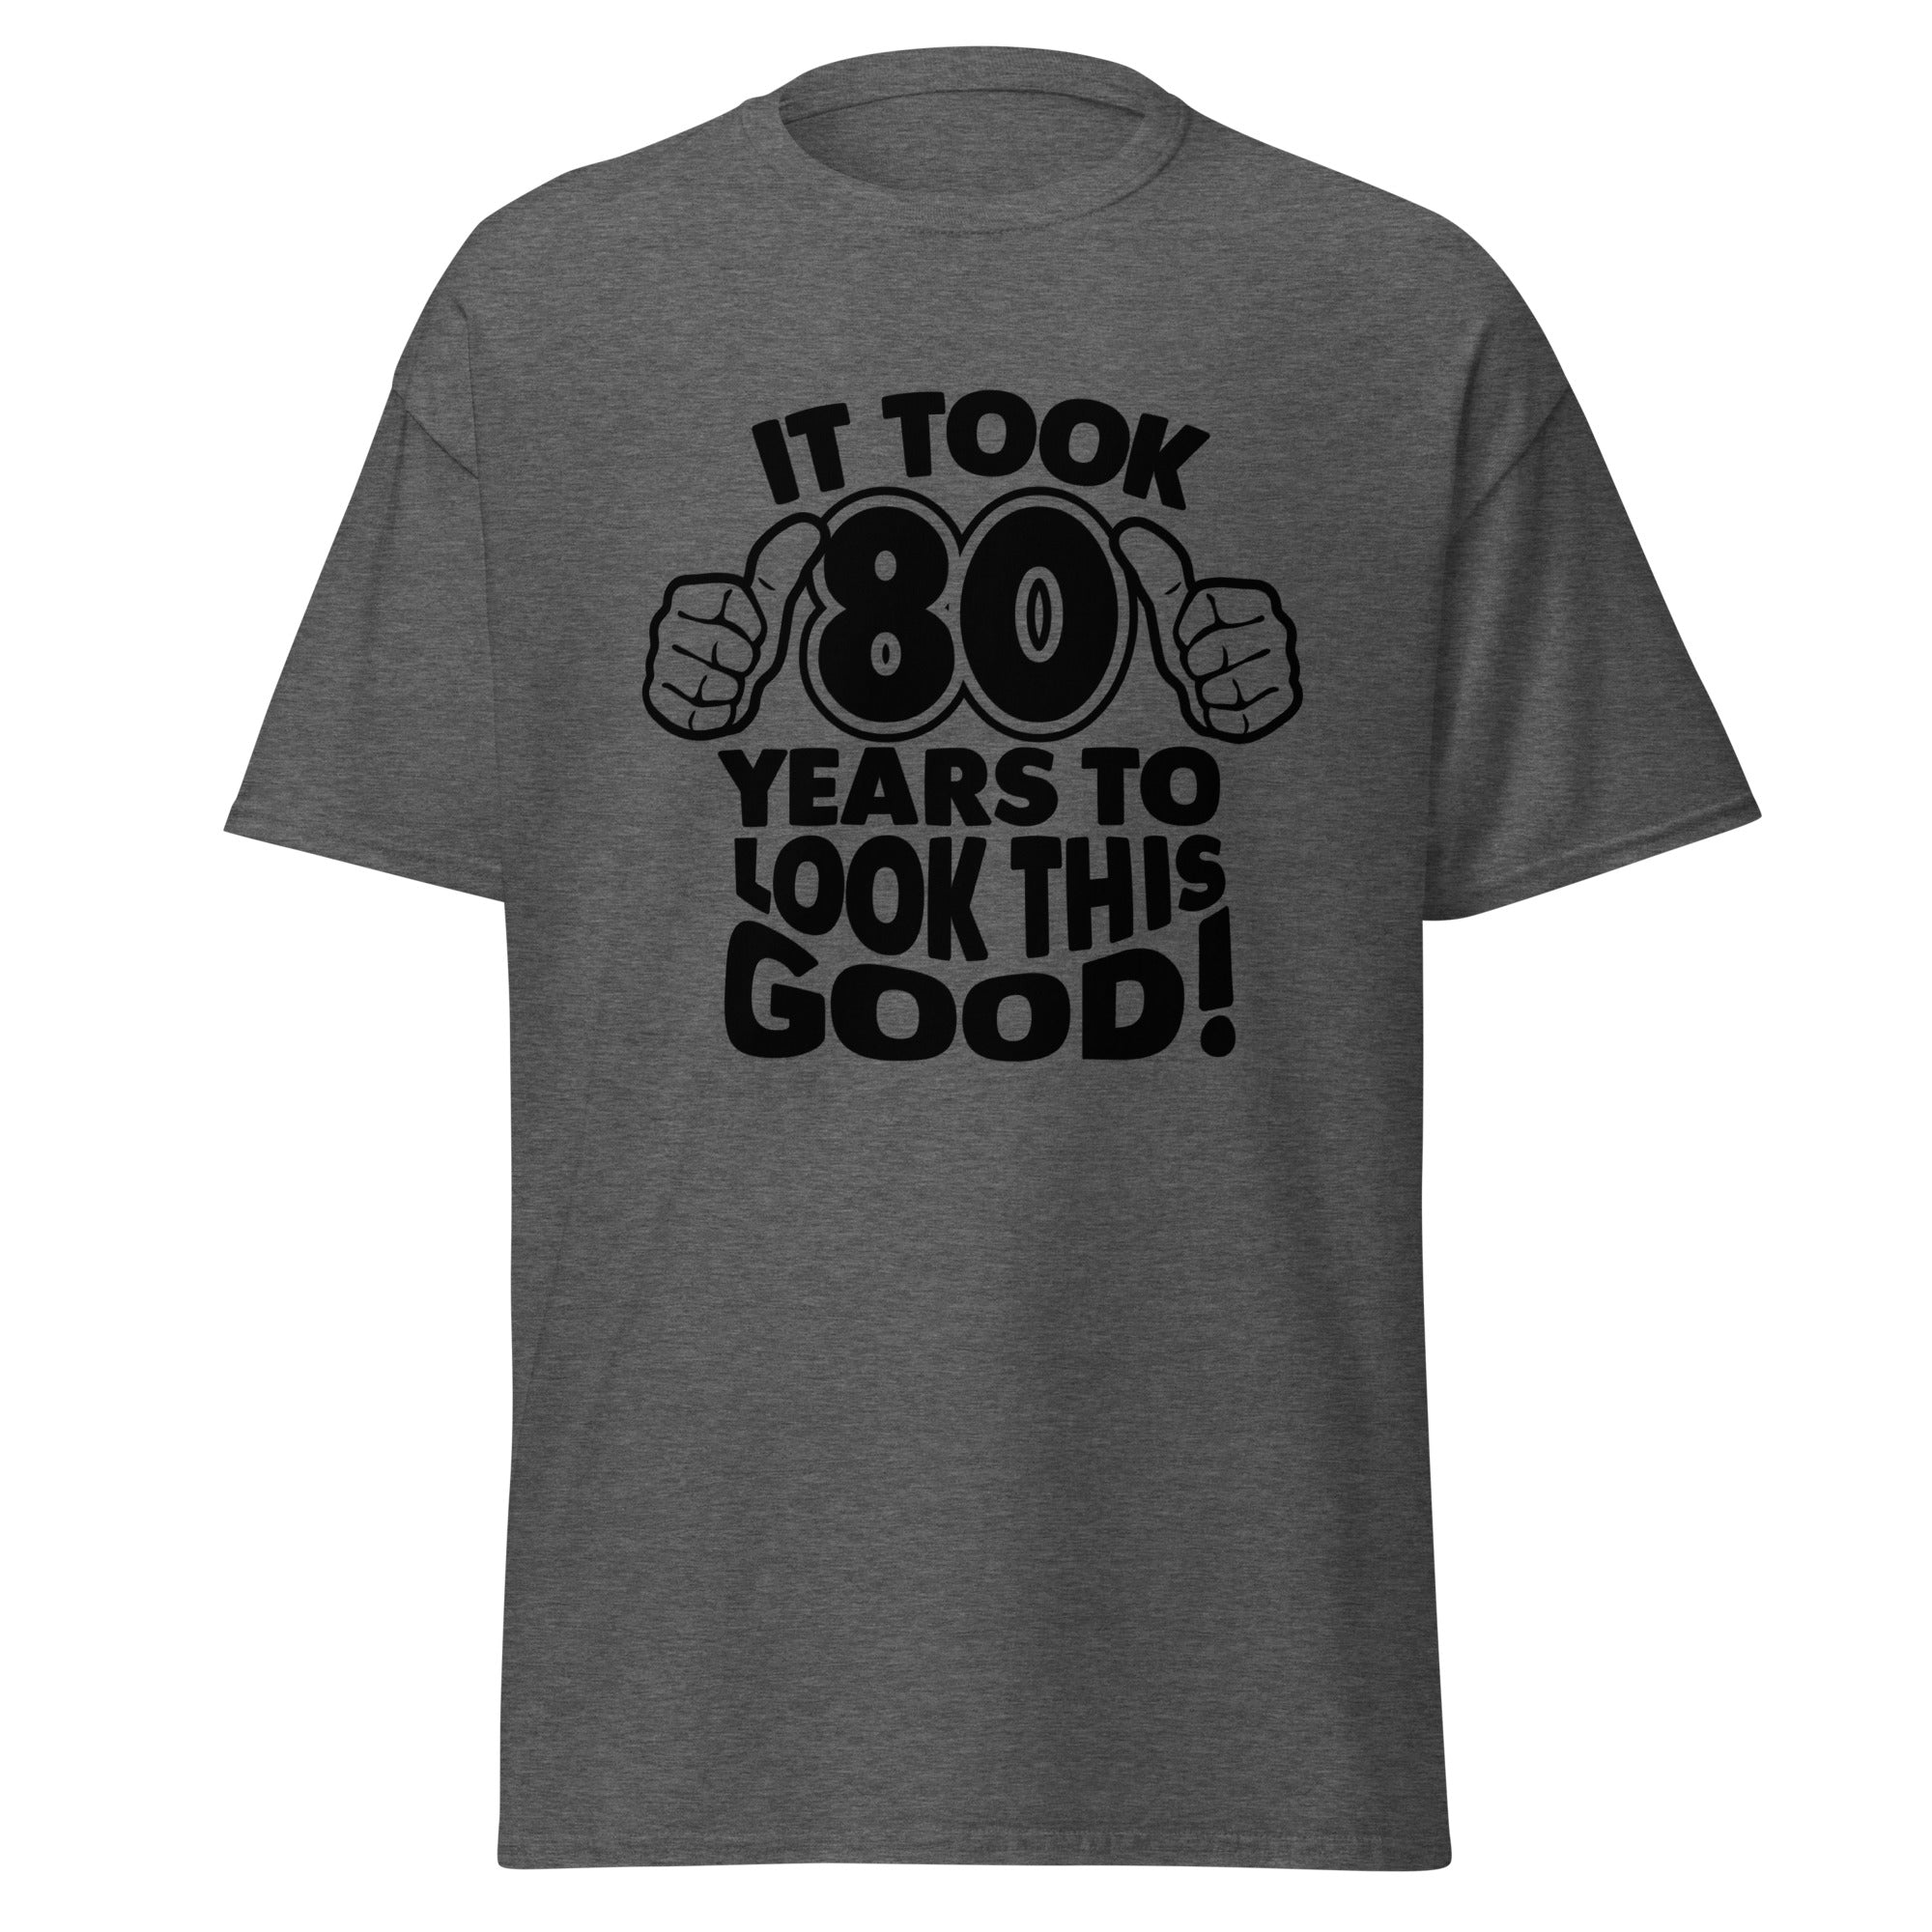 80th Birthday Shirt